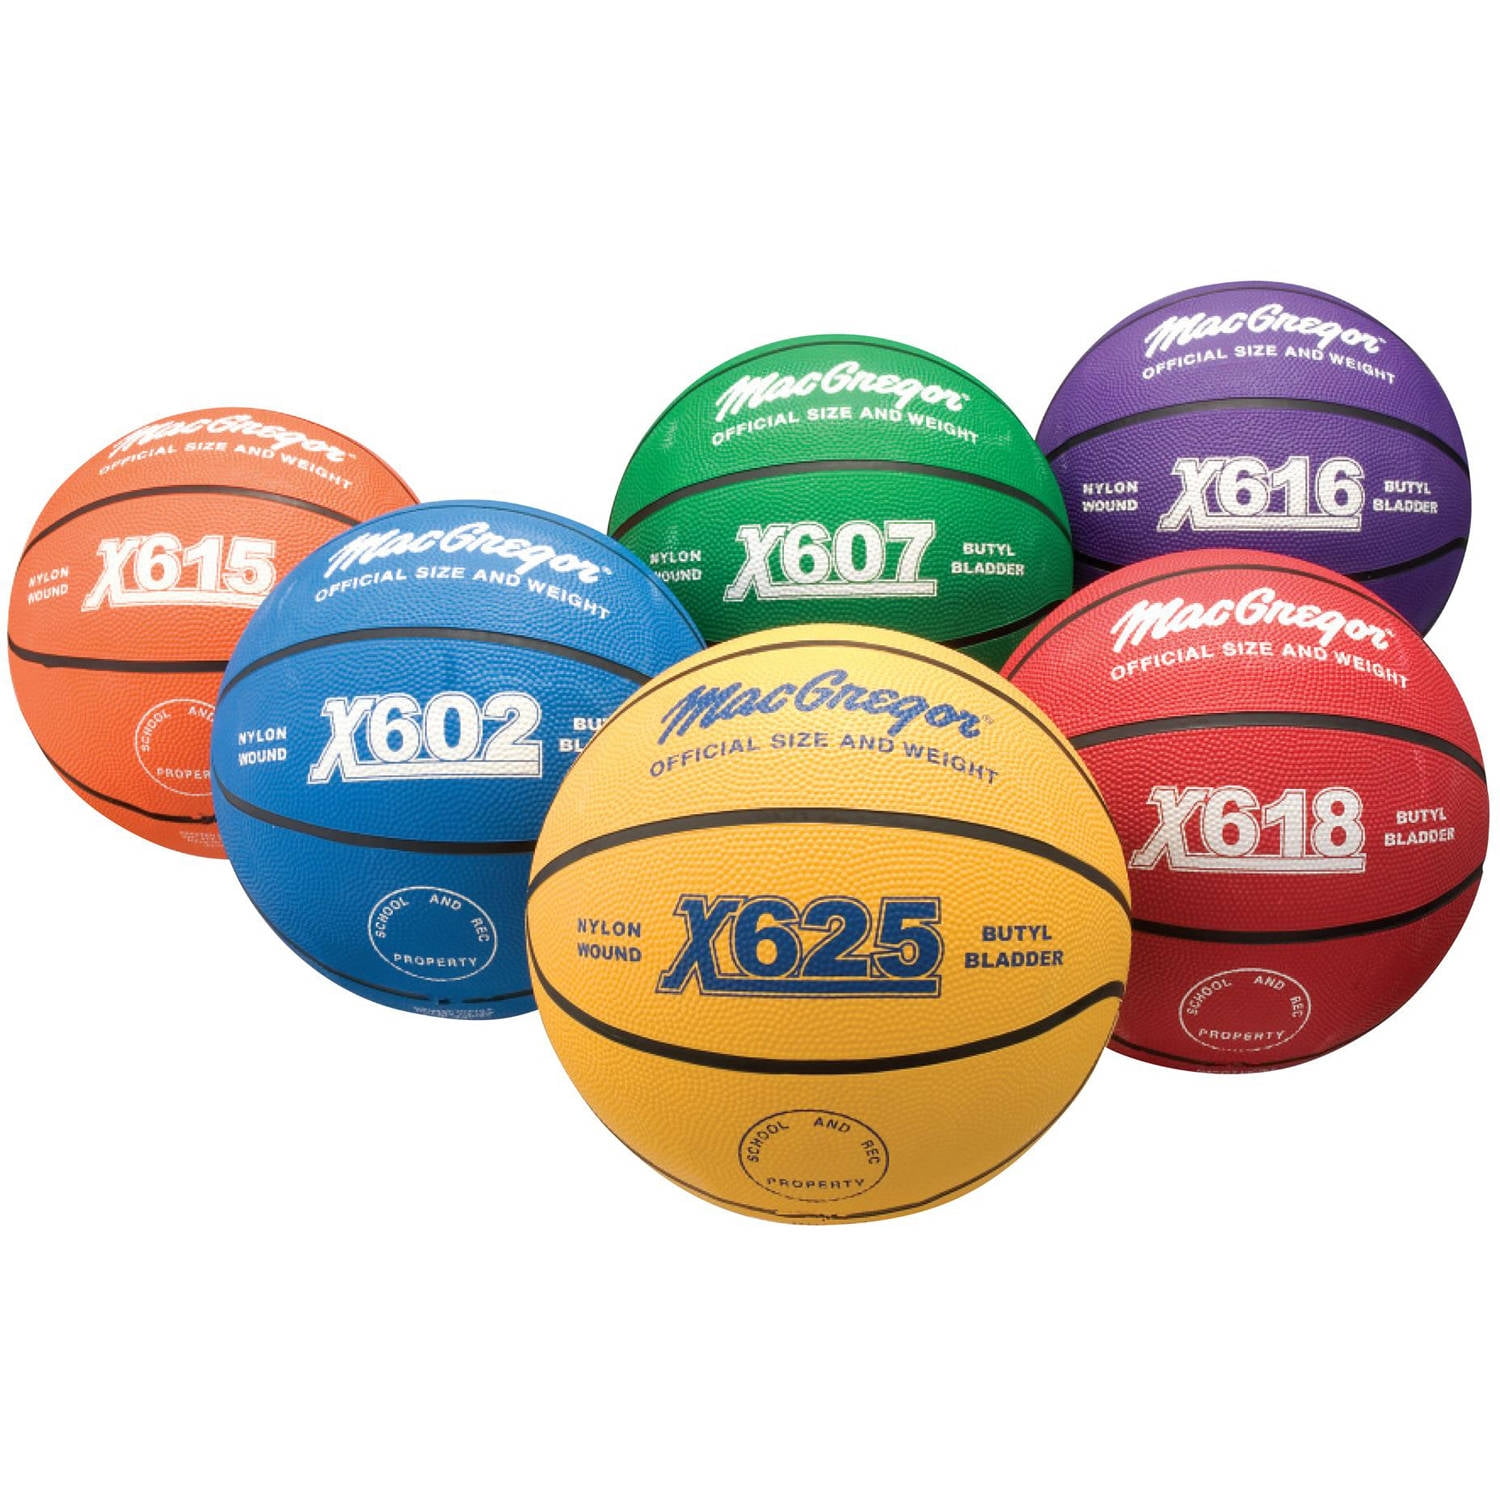 Kuangmi Multi-color Basketball for Junior Kids Child Boys Girls Size 5 27.5" 